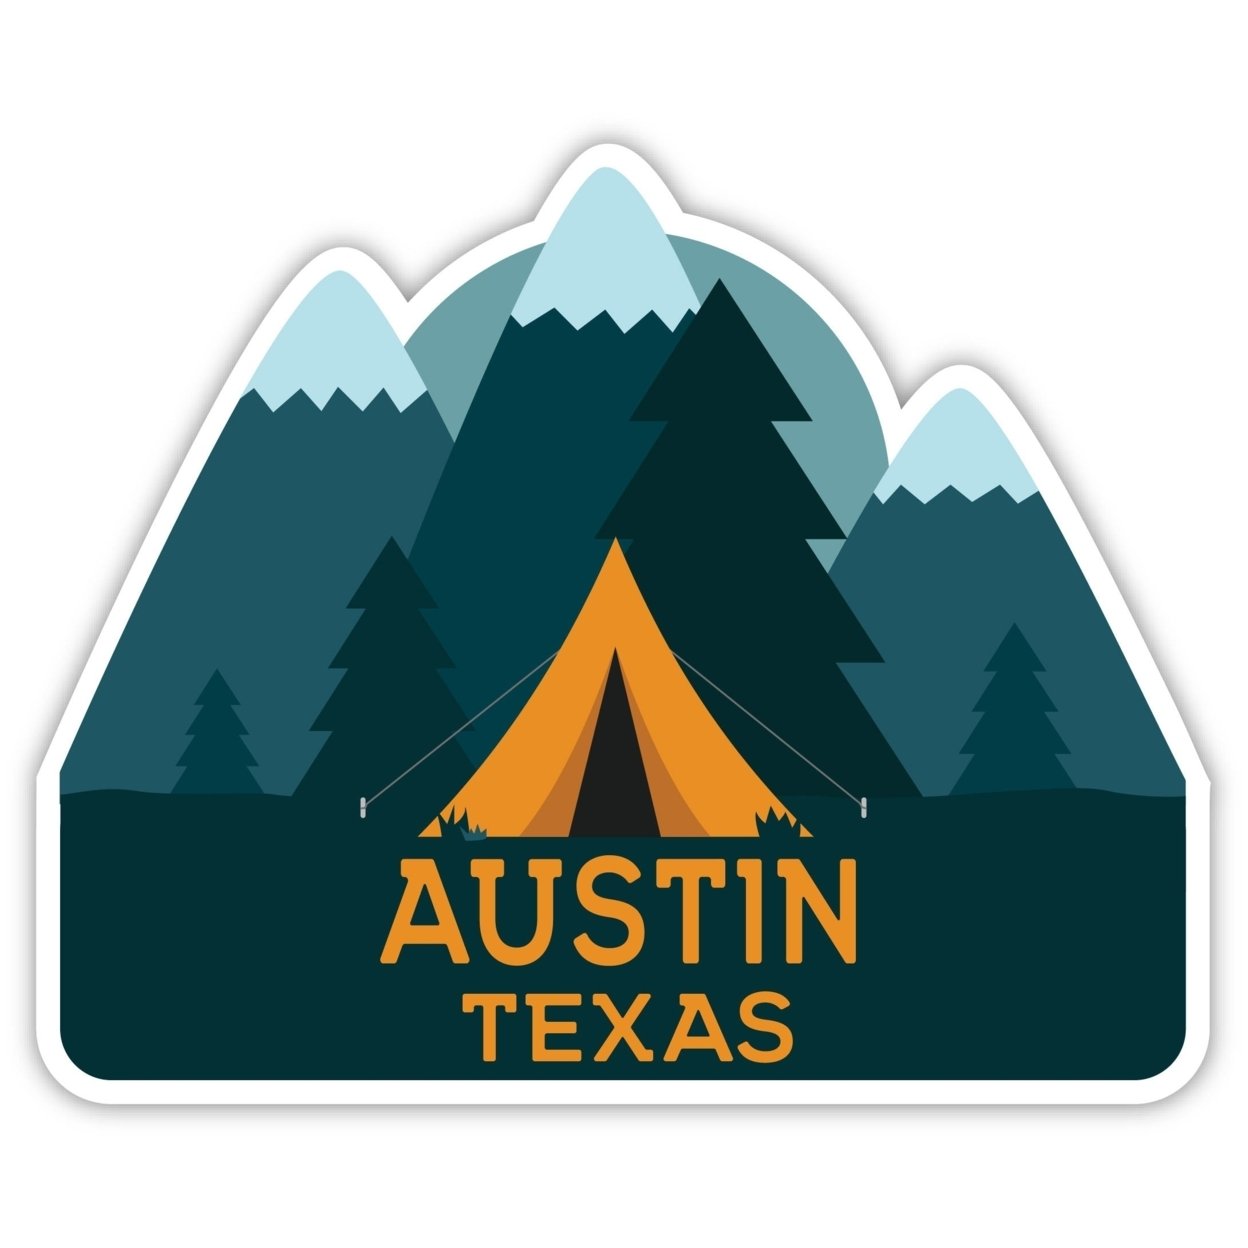 Austin Texas Souvenir Decorative Stickers (Choose Theme And Size) - 4-Pack, 2-Inch, Tent